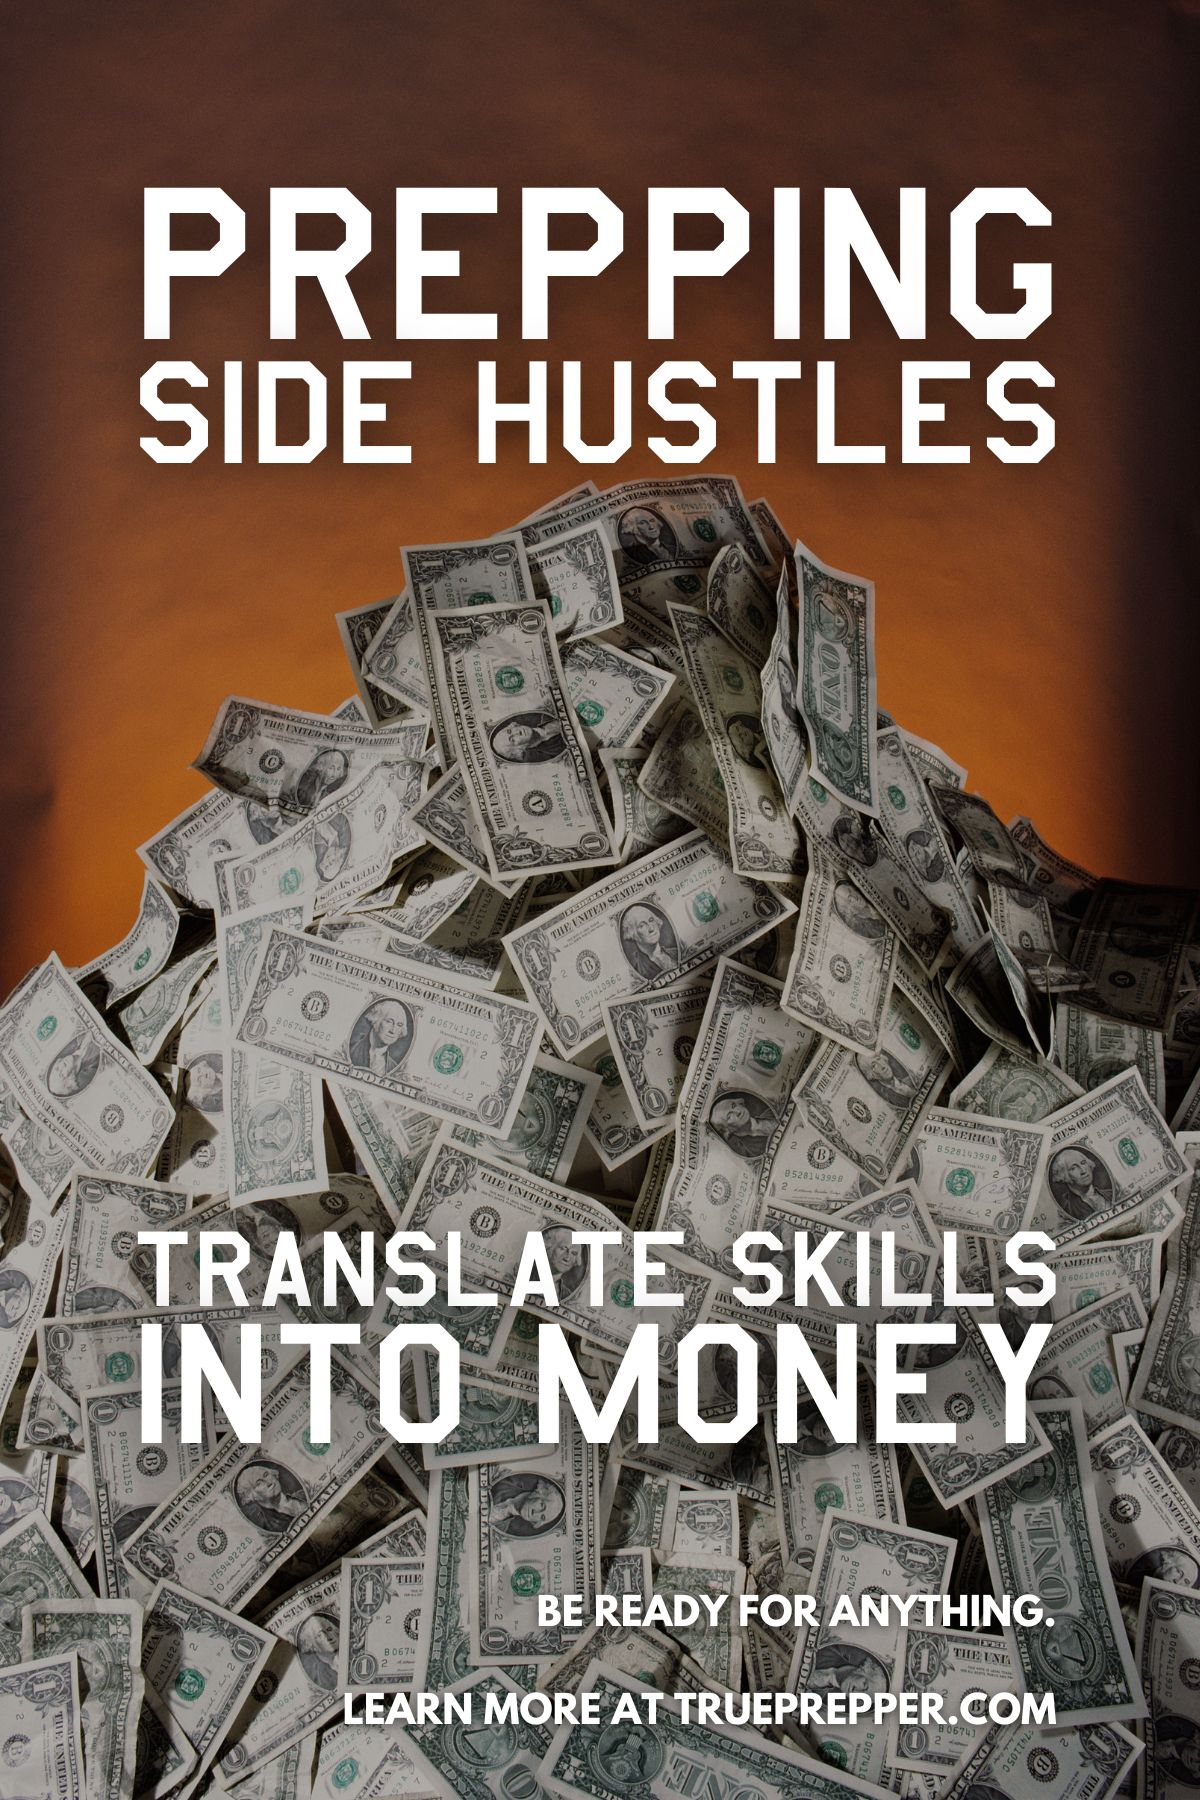 Prepping Side Hustles | Translate Skills Into Money